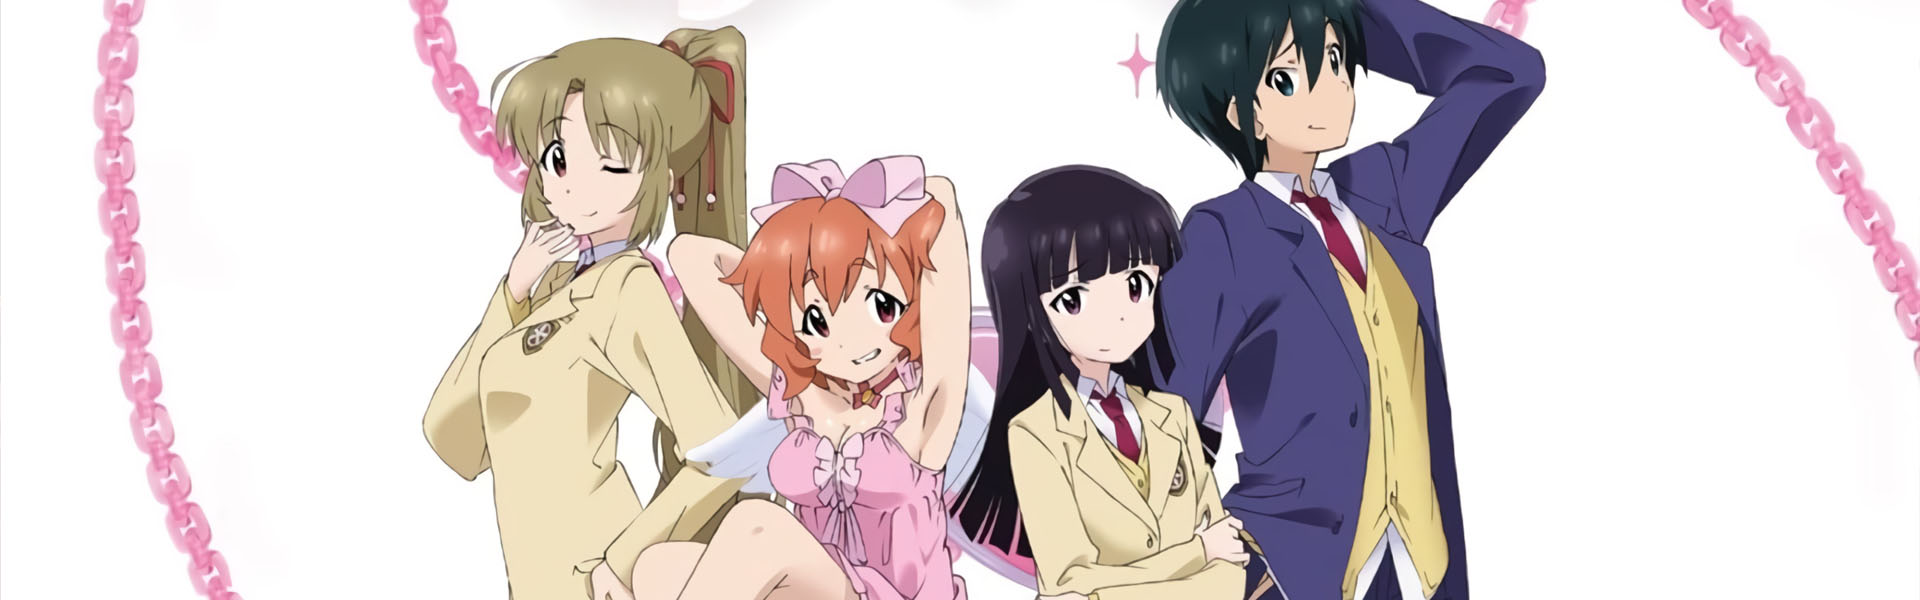 Saikô Animes on X: #SaikiKusuo - 04 - Baixar e Assistir Online . Fansub:  PunchSub MP4/HD Link:   / X